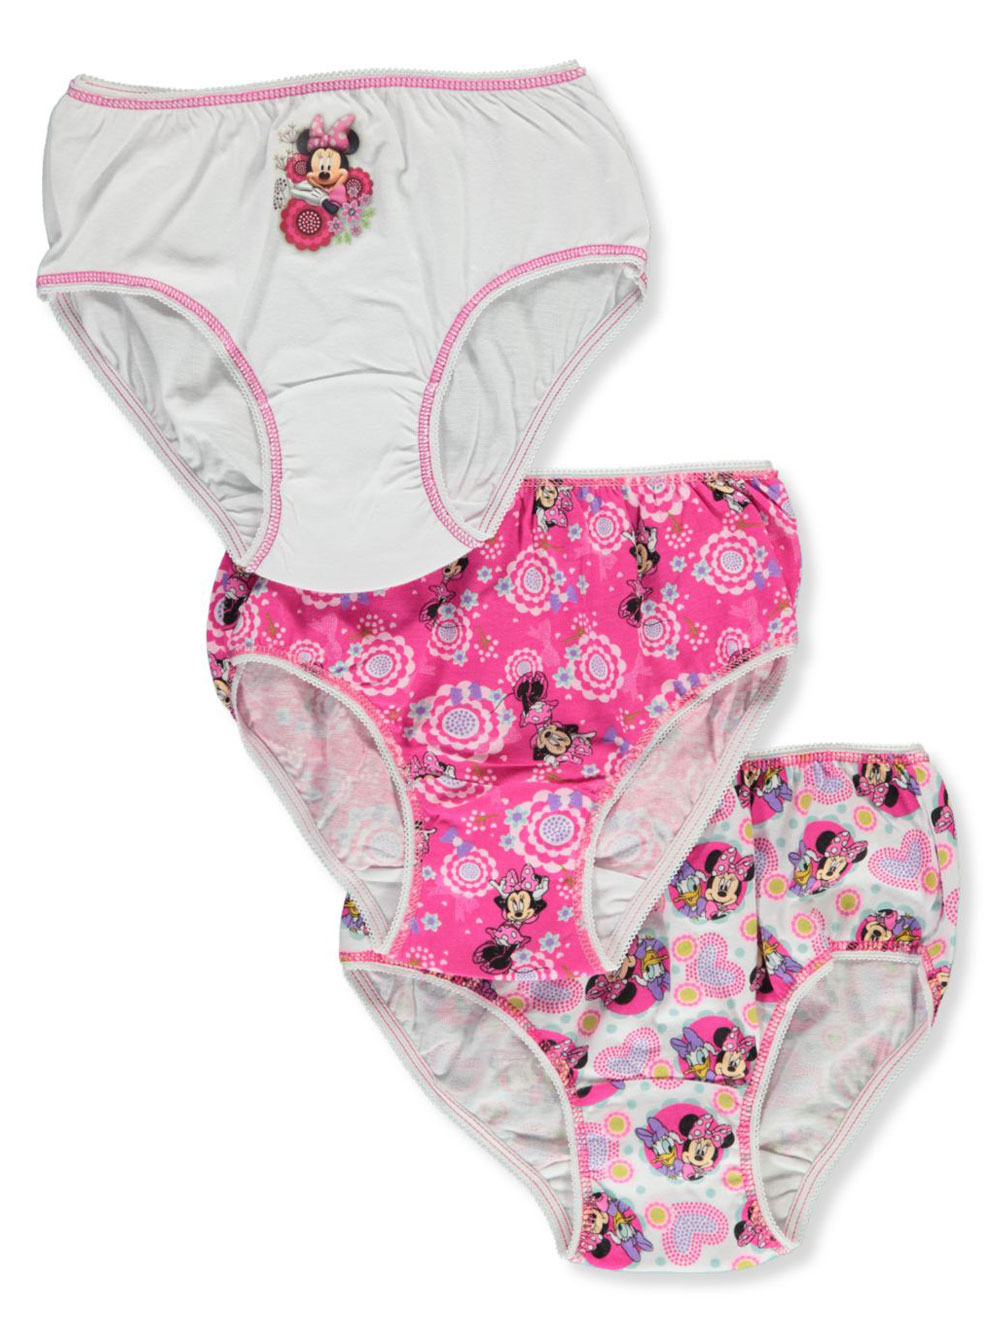 Disney Minnie Mouse Toddler Girls 3 Pack Underwear Panties 